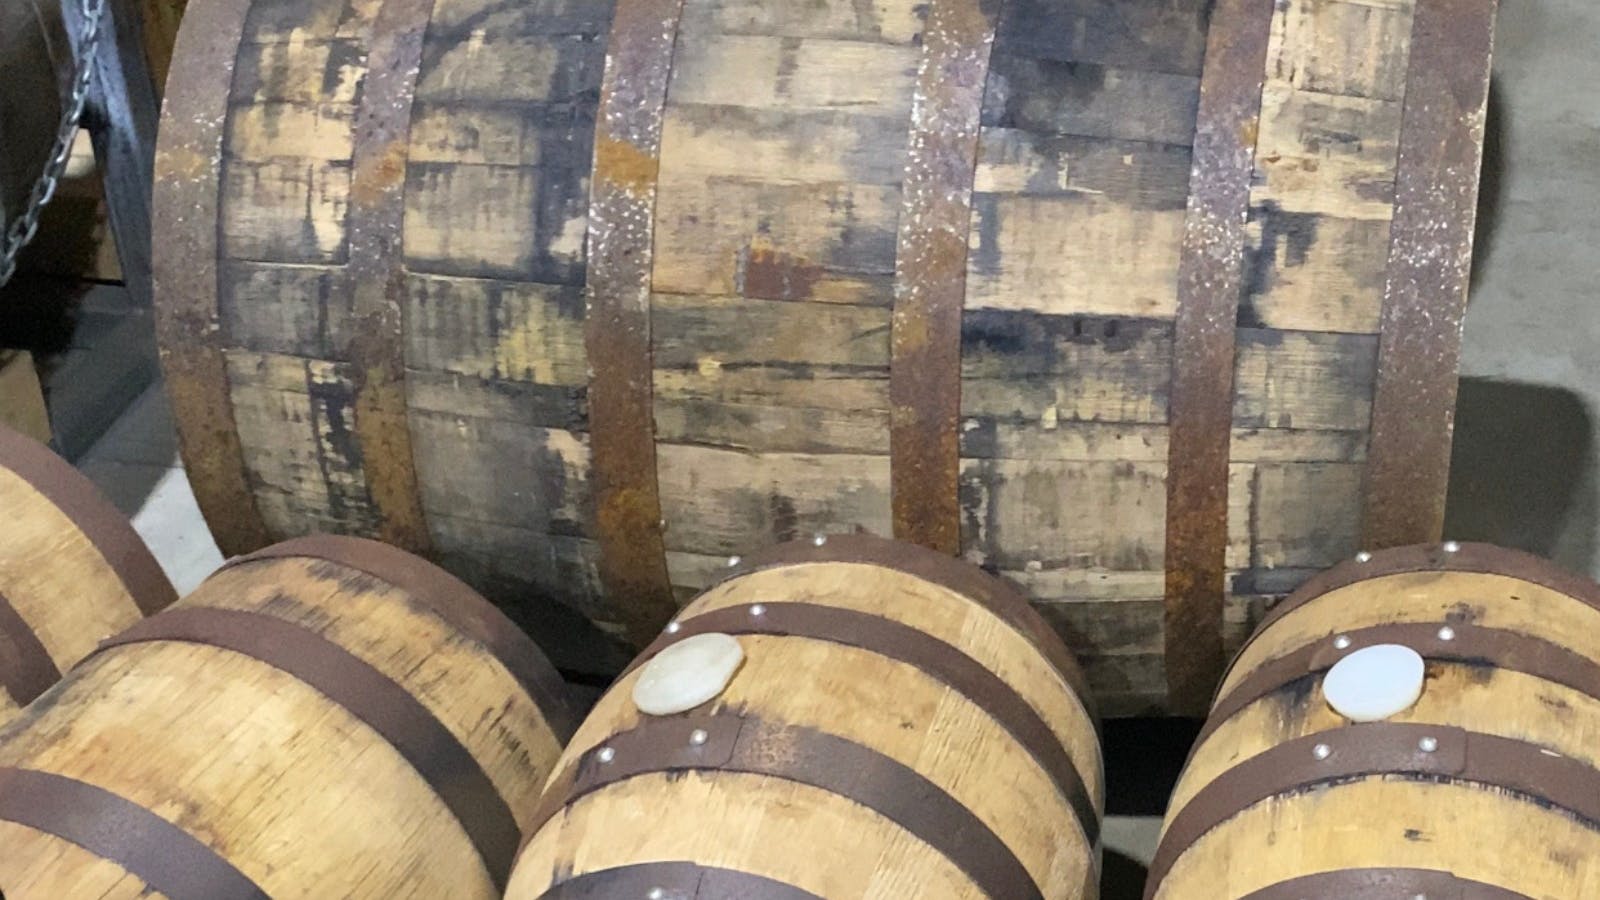 Barrels of delightful whisky at Spring Bay Distillery